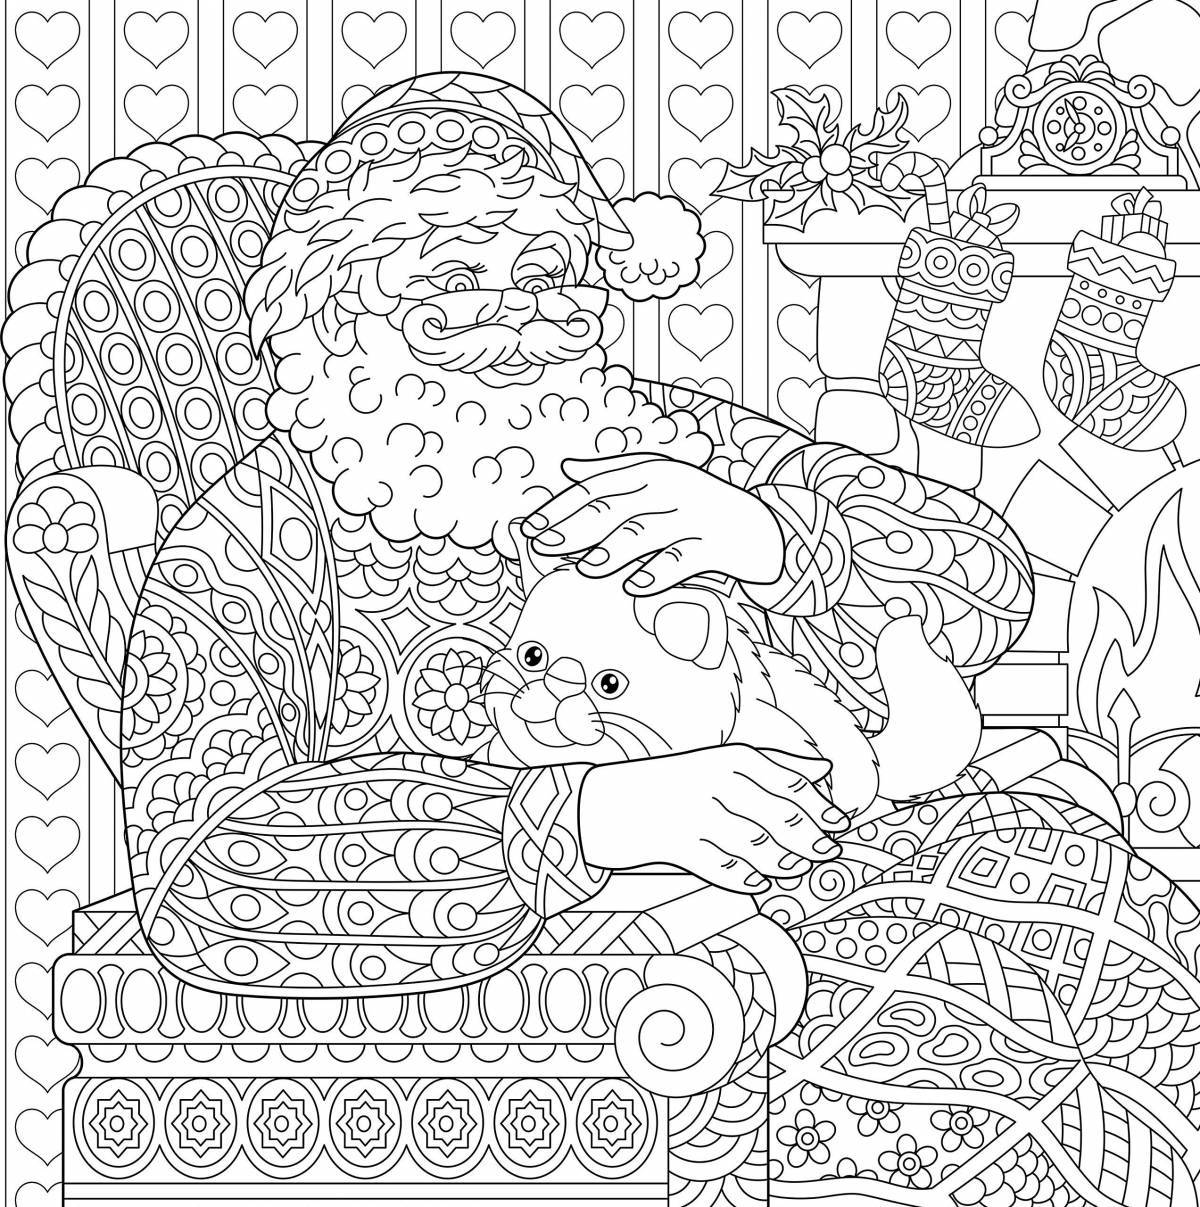 Inspiring anti-stress Christmas coloring book